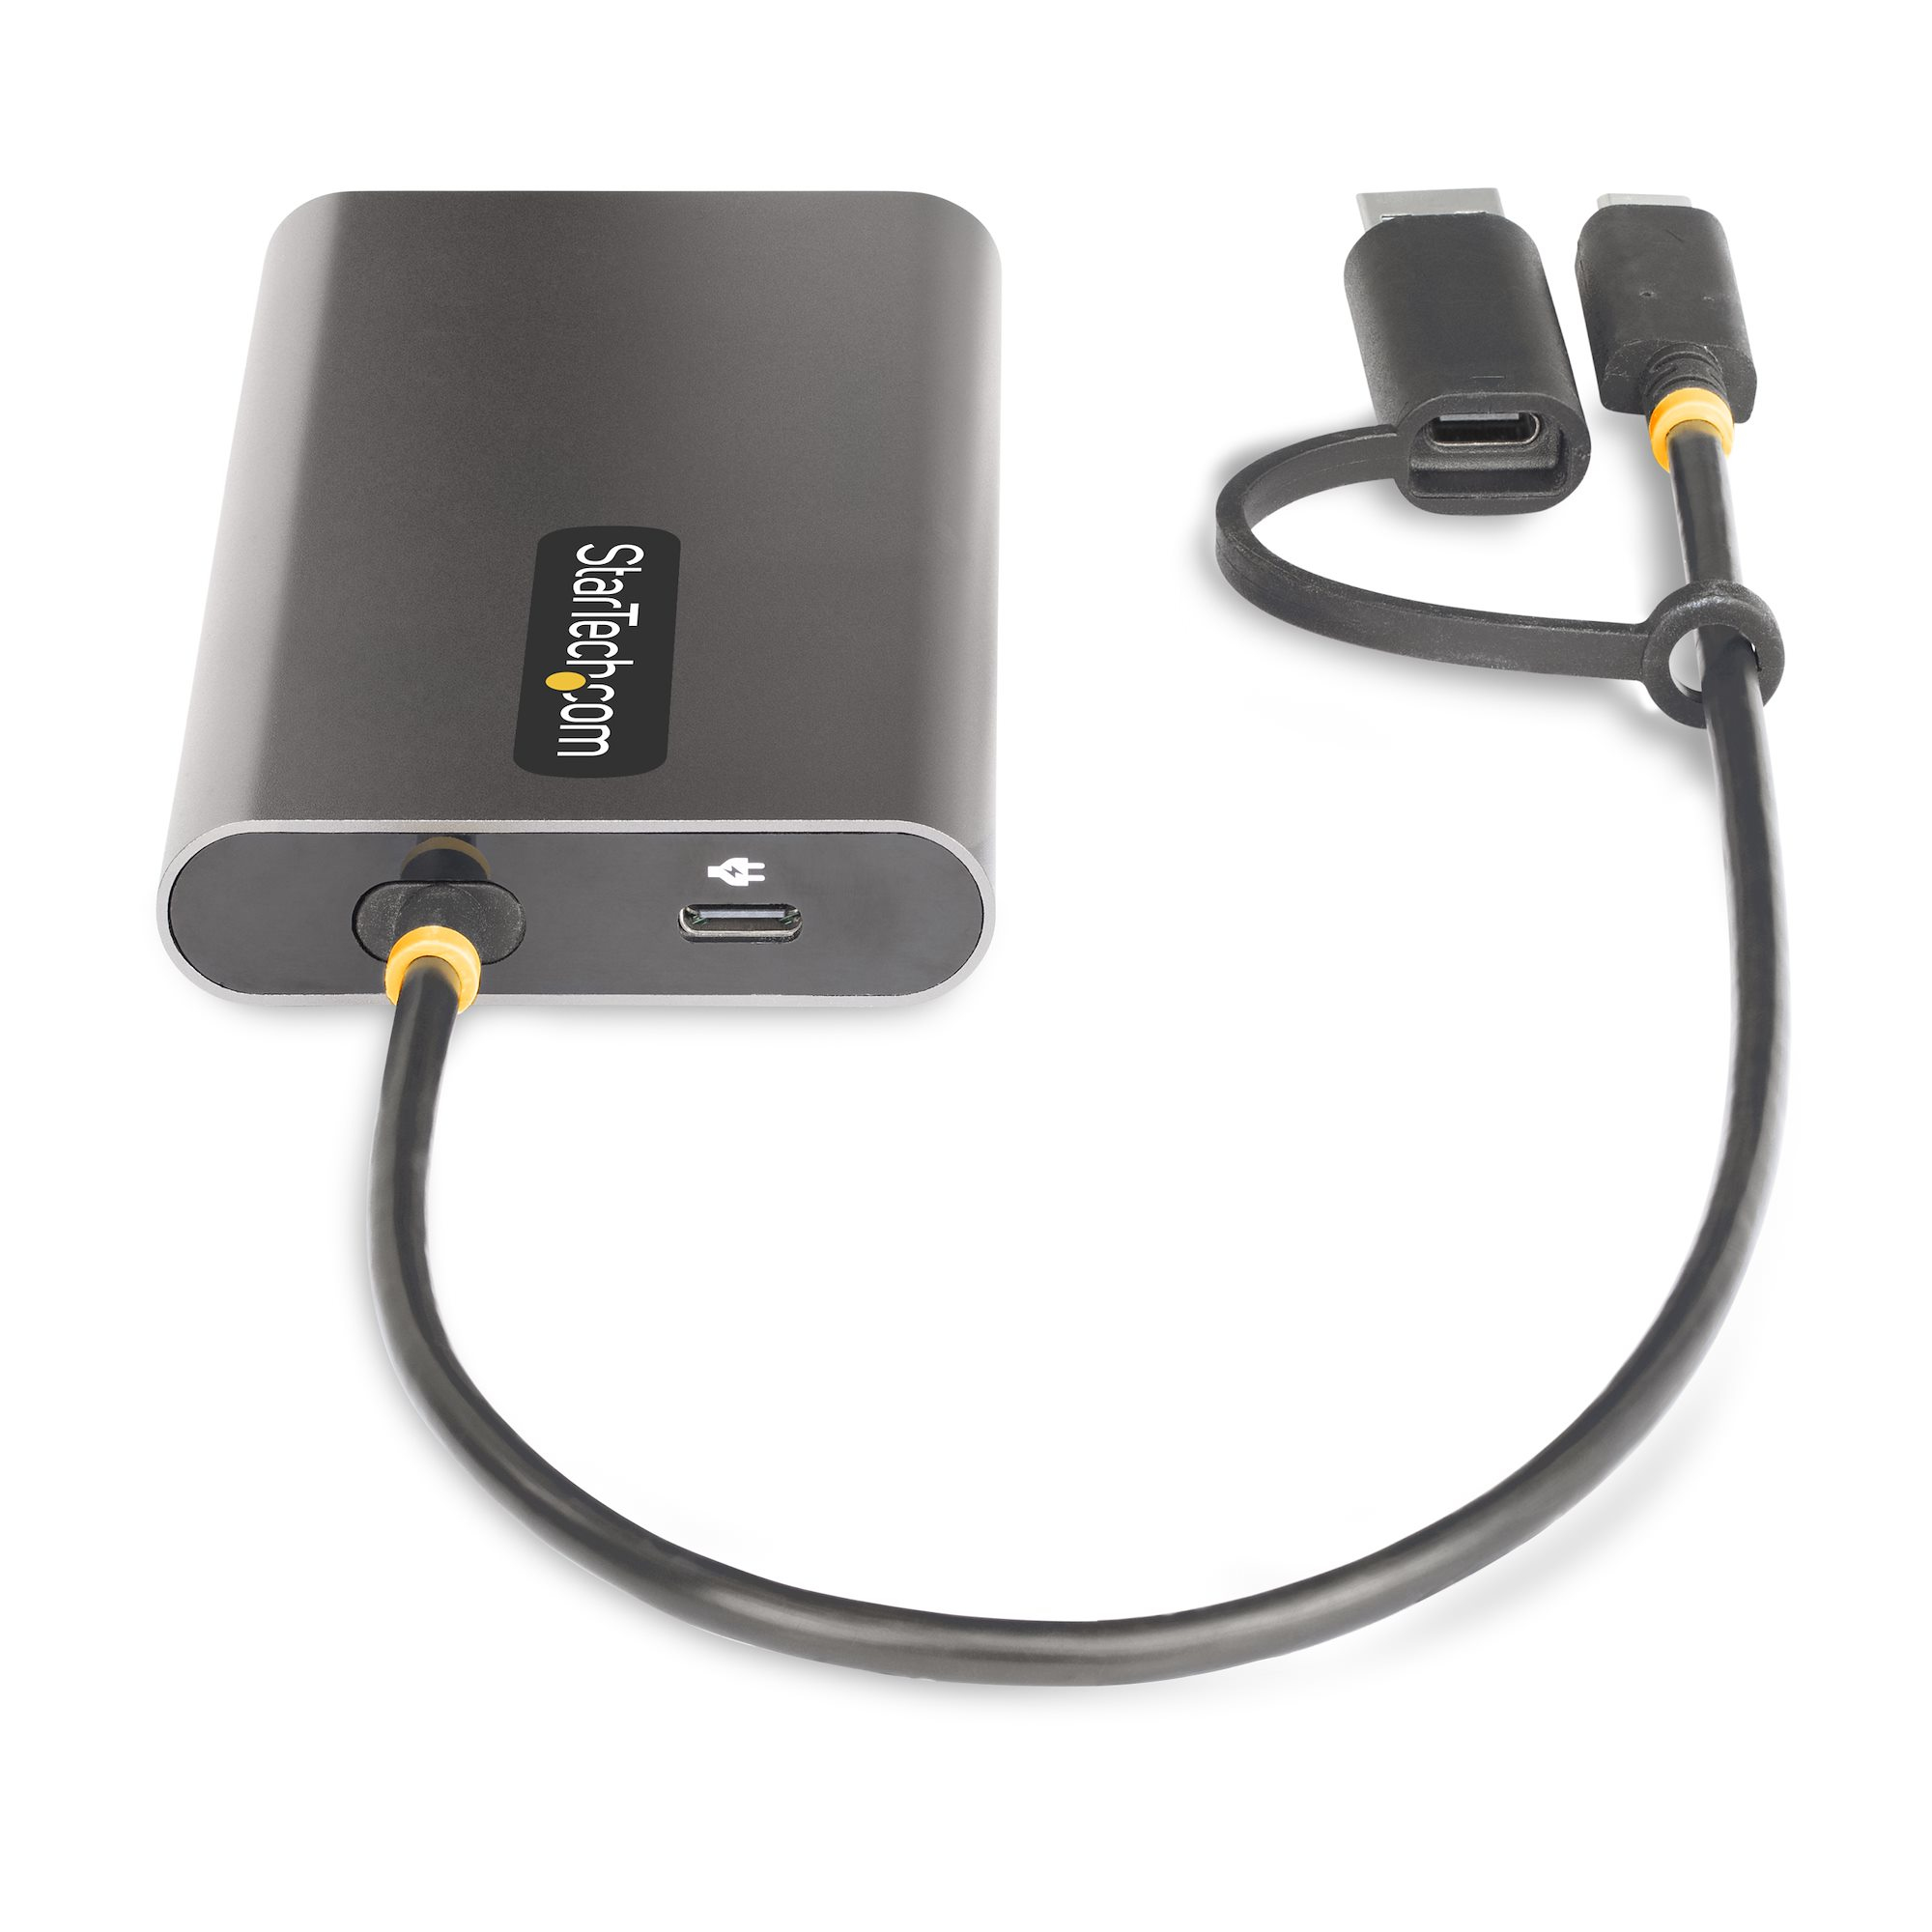 StarTech.com USB-C to HDMI Adapter